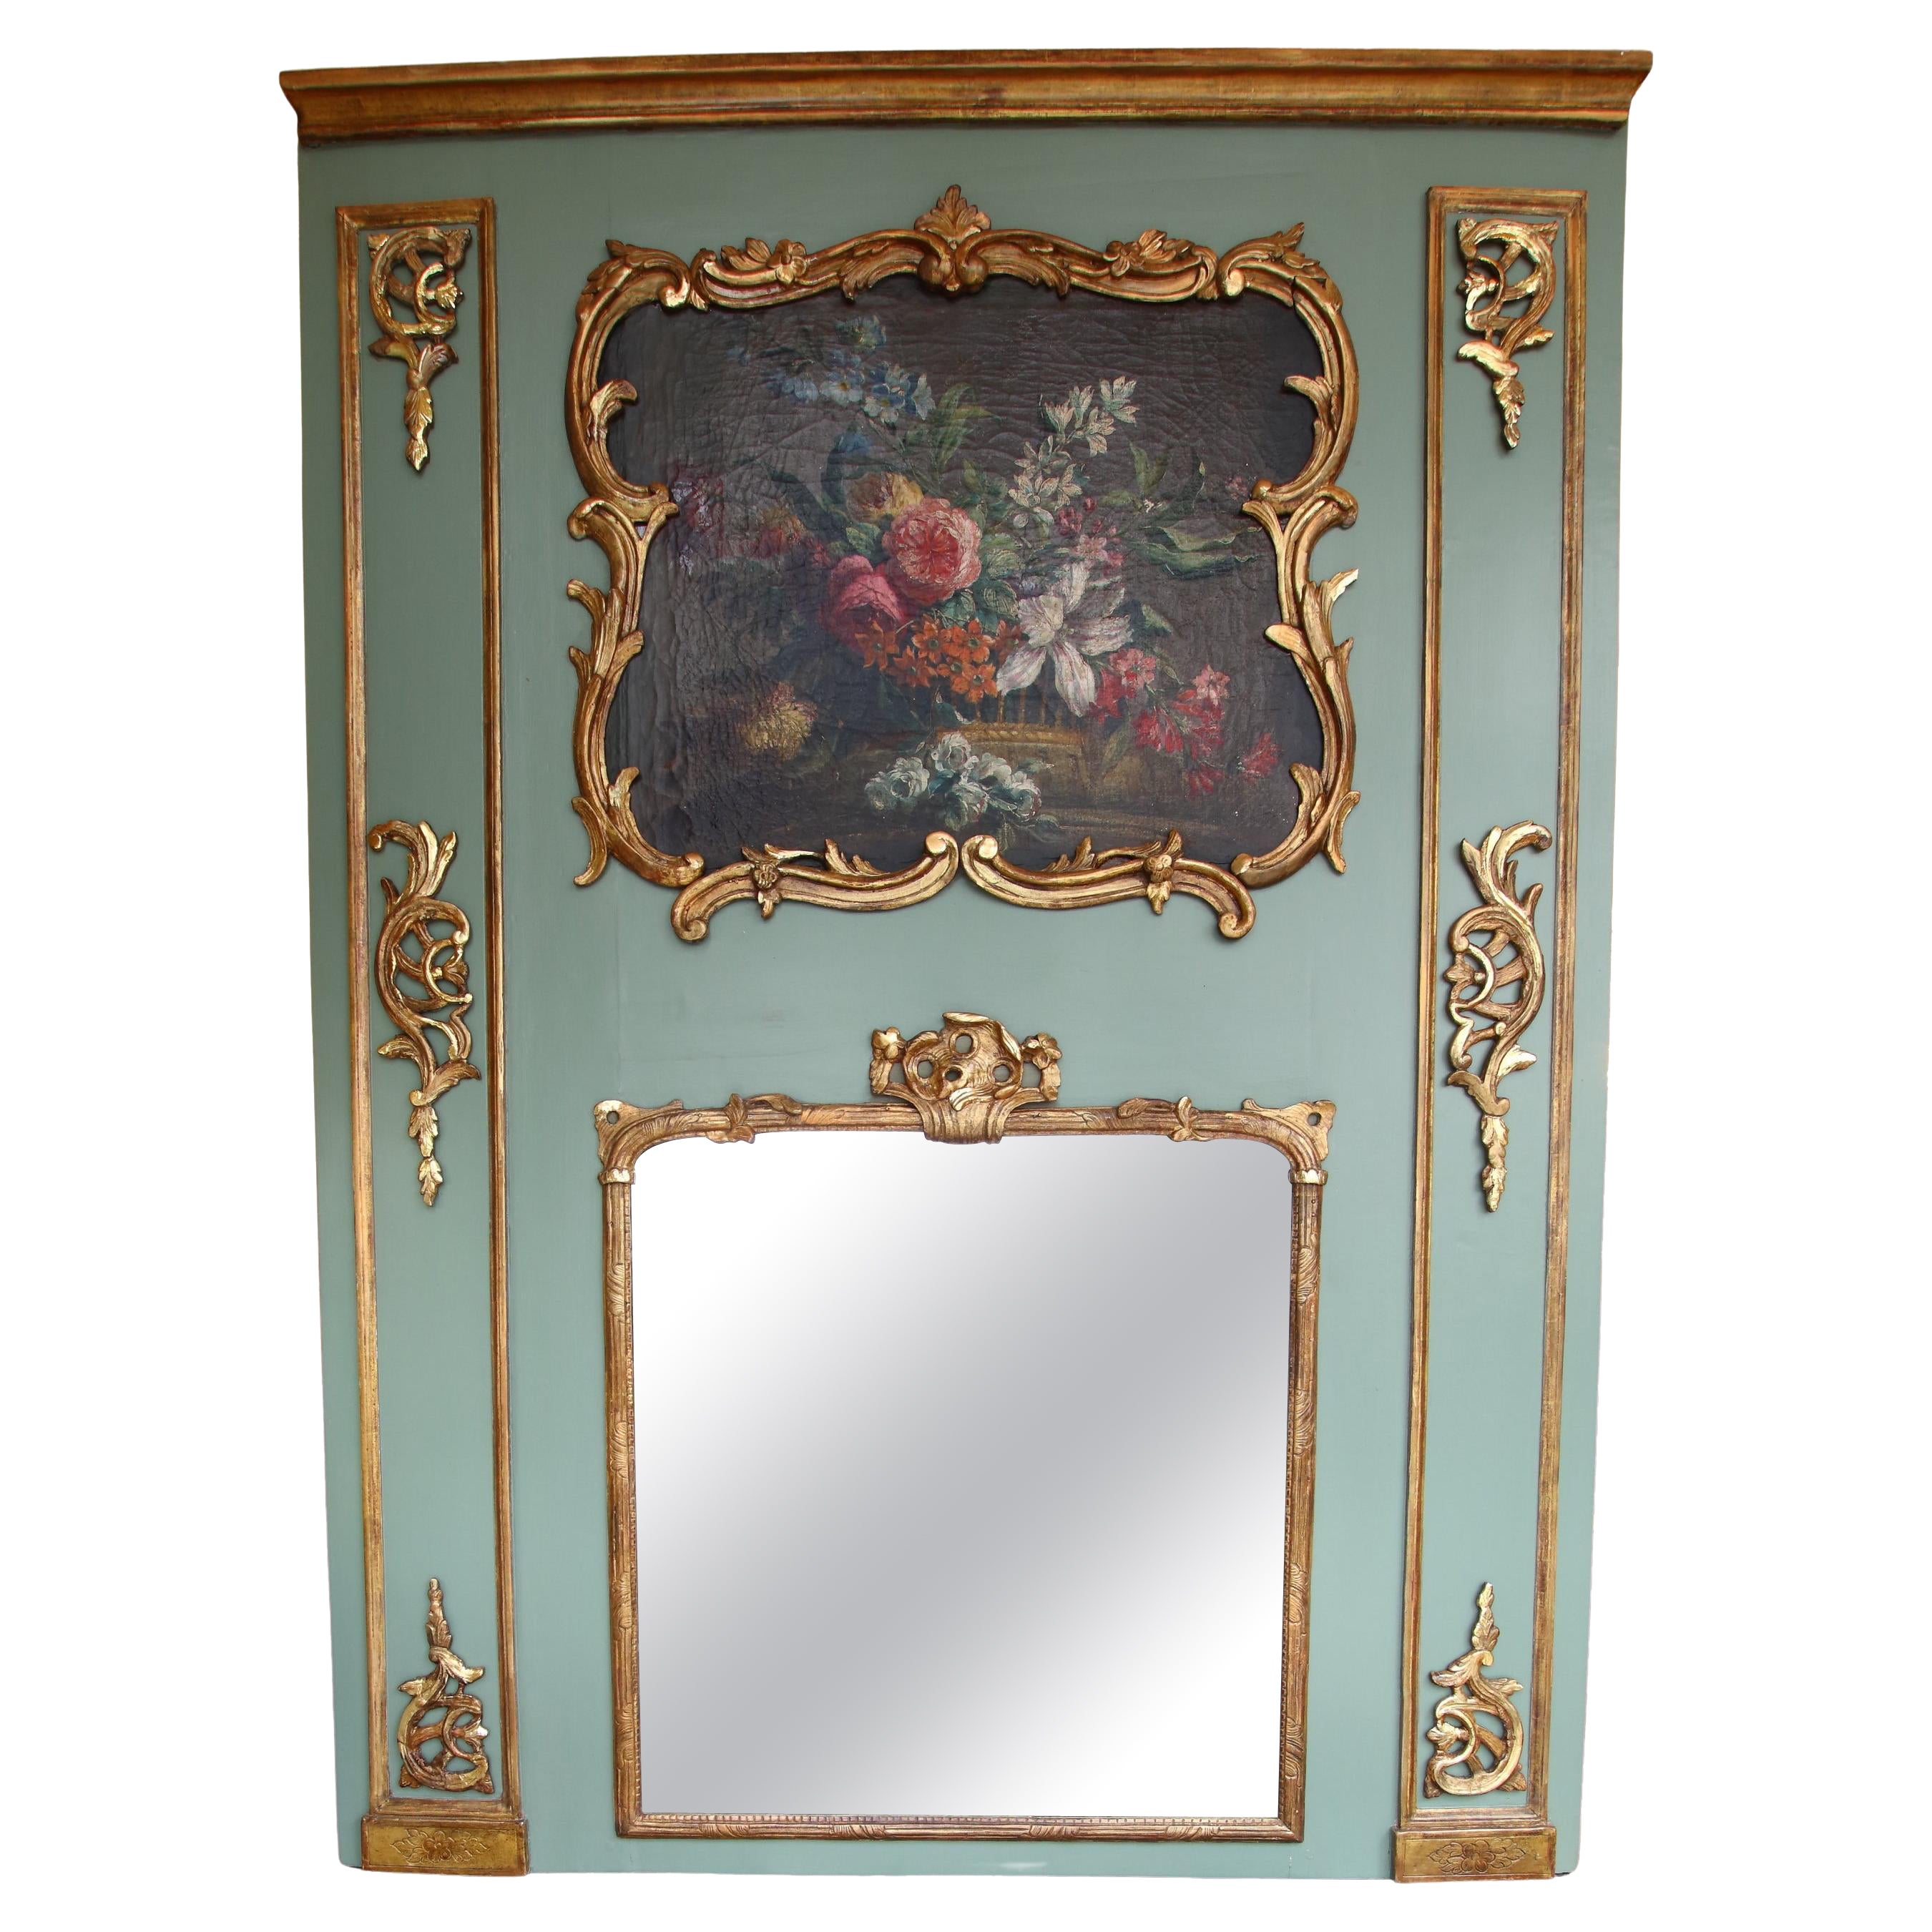 18th Century French Louis XV Period Flower Still Life Trumeau Wall Mirror